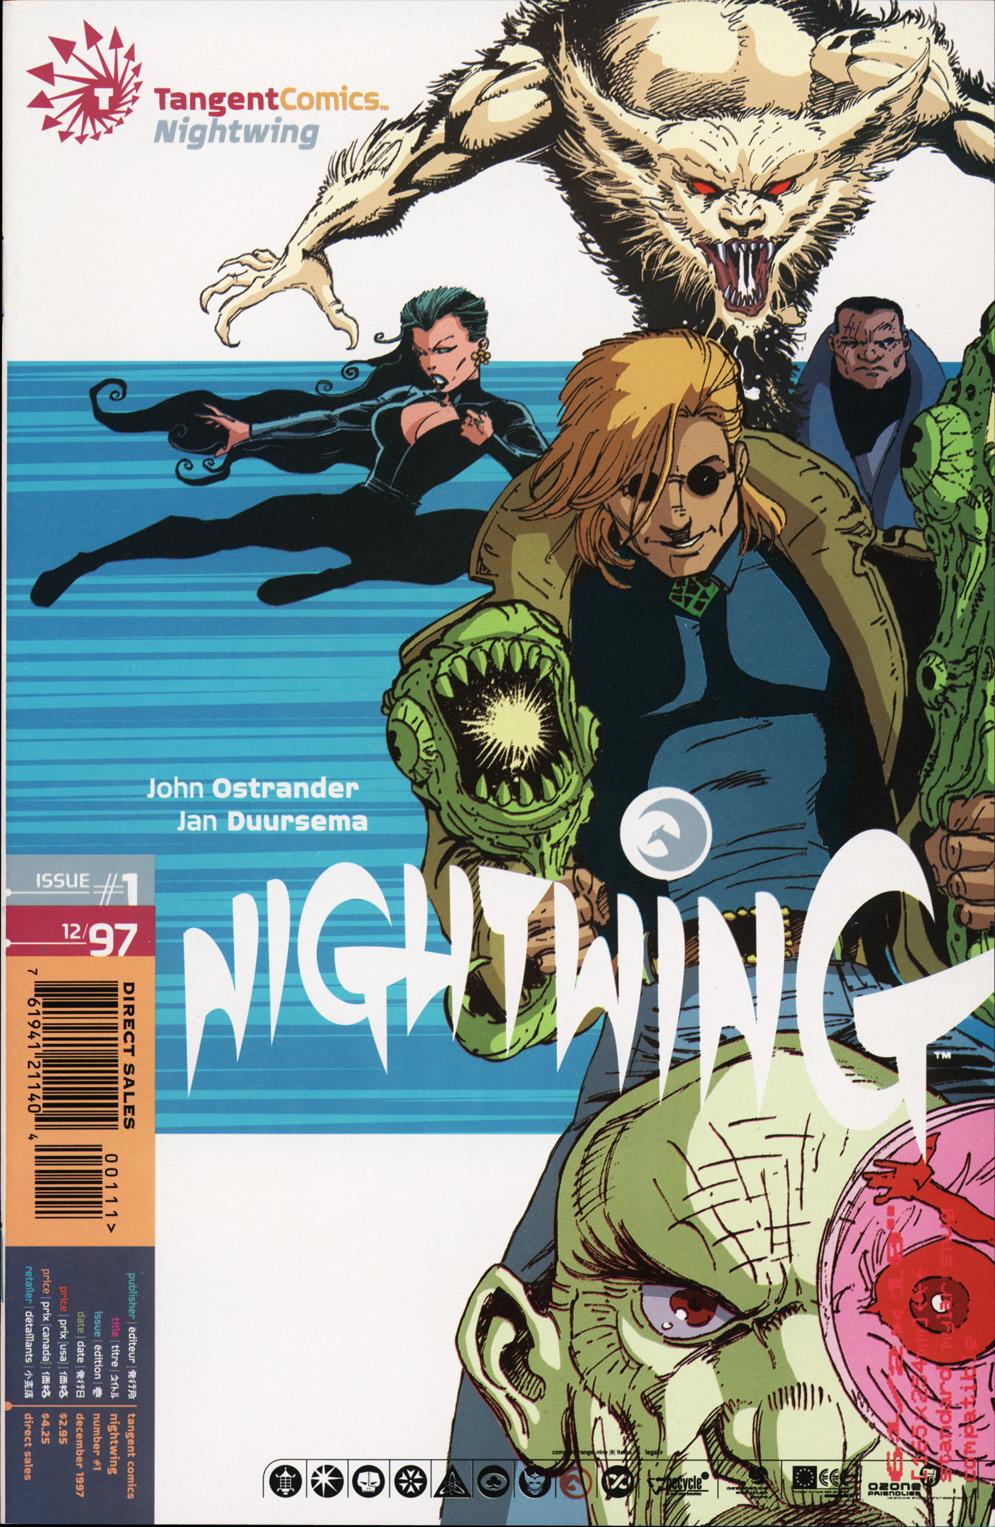 Tangent Comics: Nightwing Vol. 1 #1